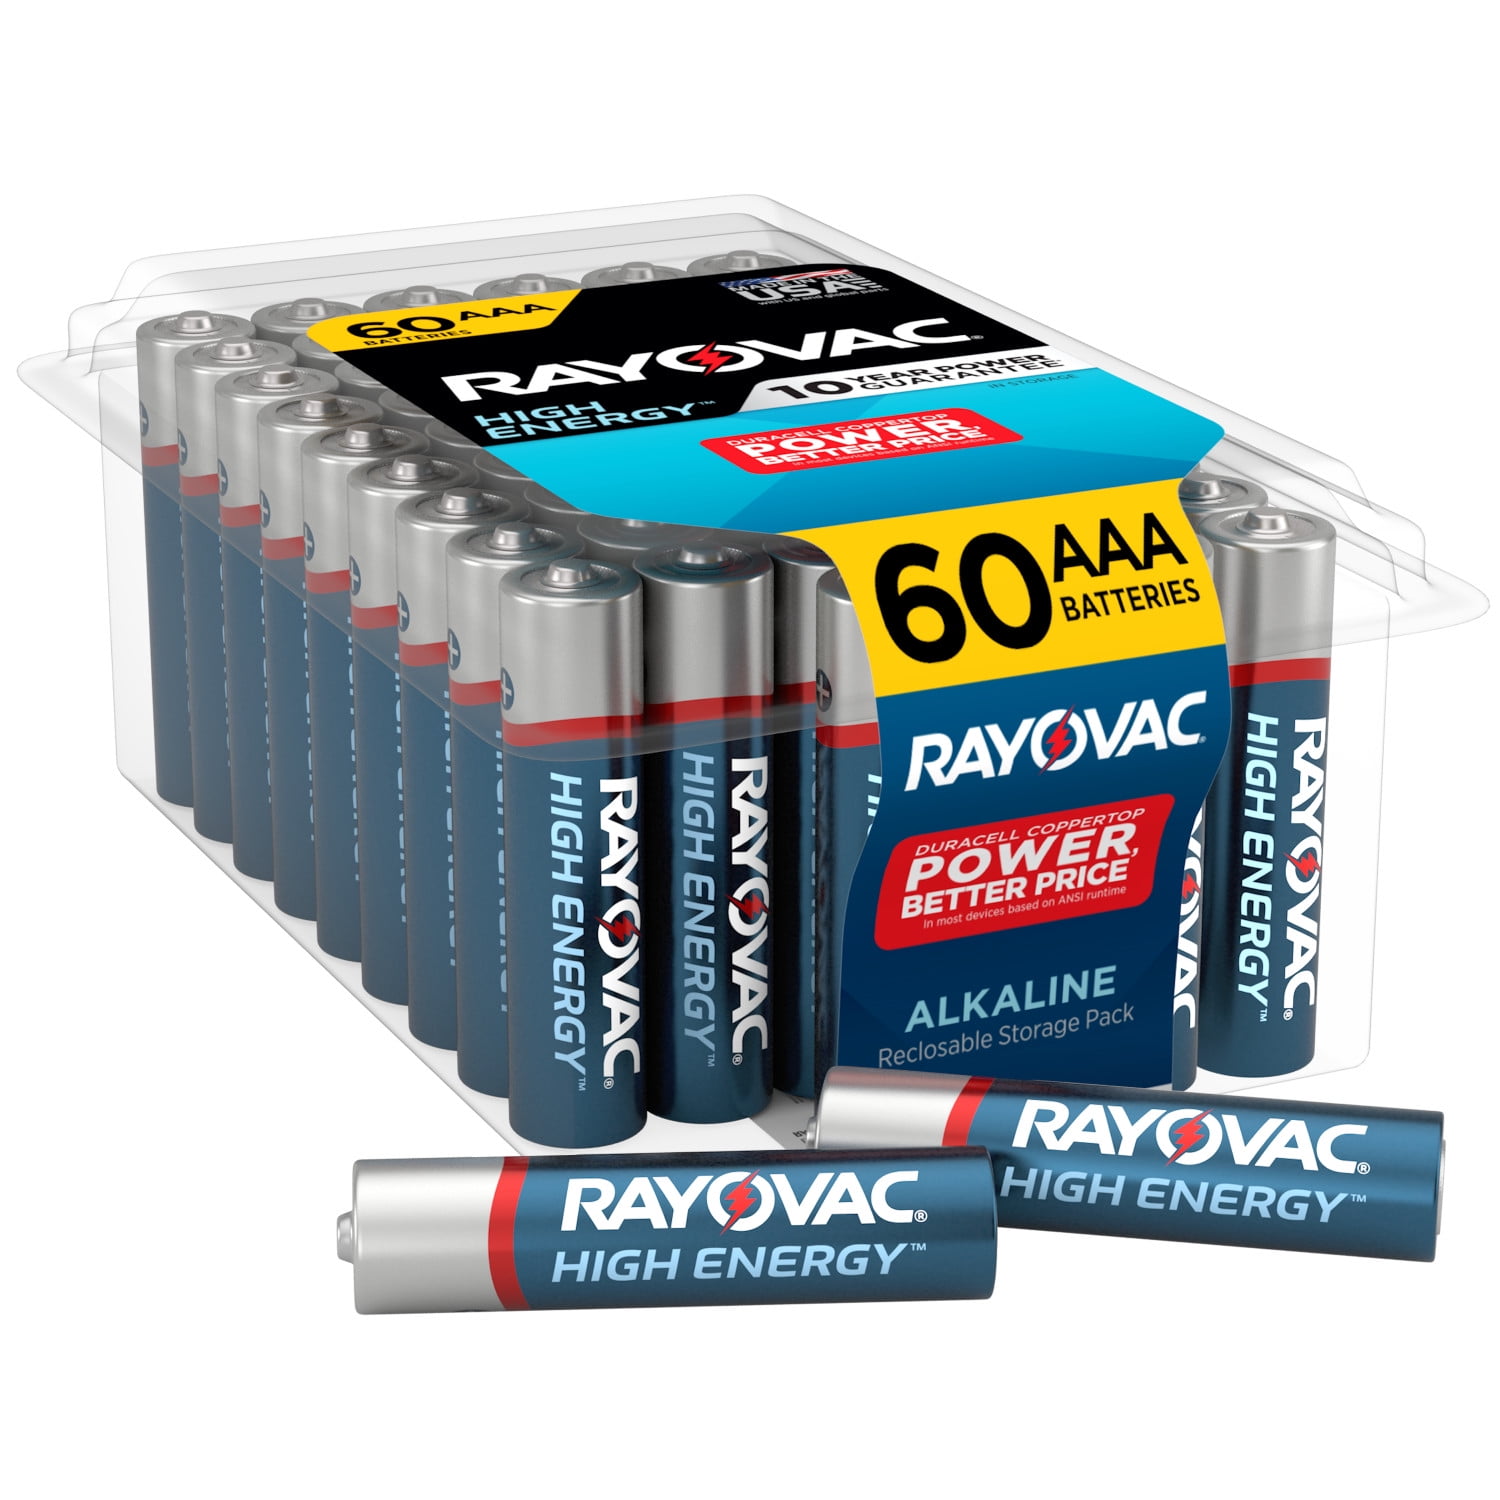 Rayovac High Energy AAA Batteries (60 Pack), Triple A Batteries